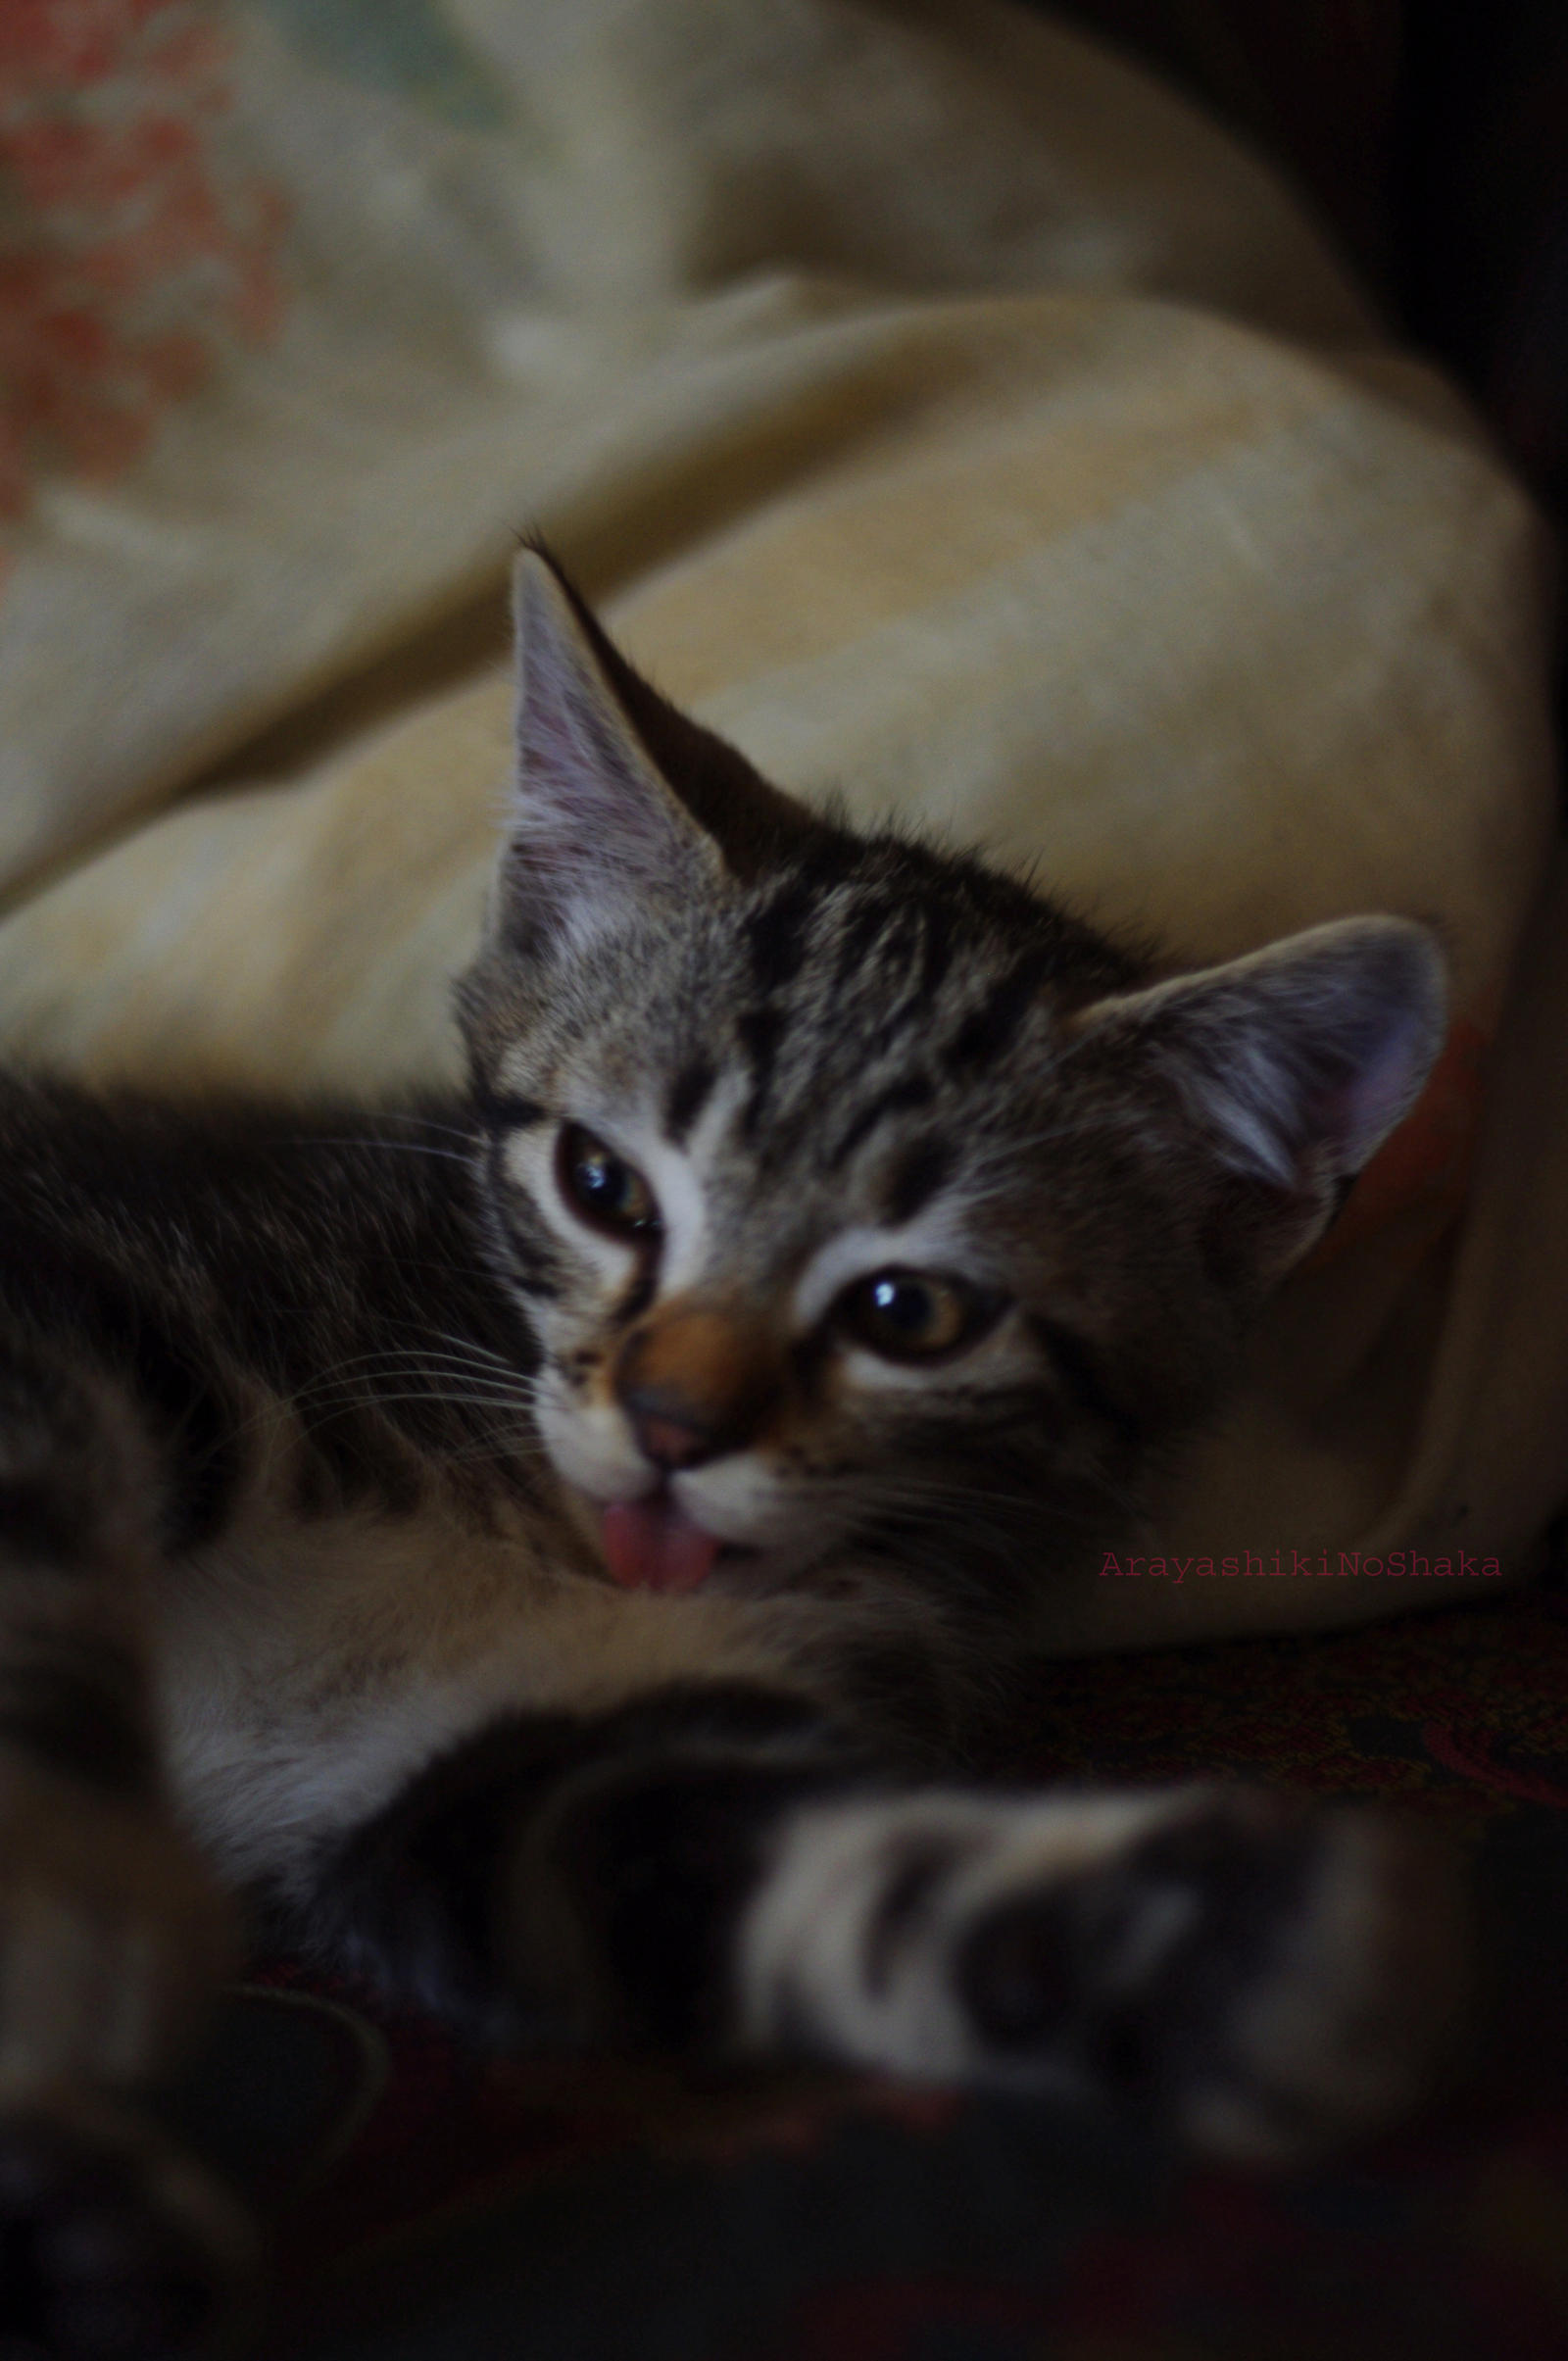 The Kitty's little tongue II